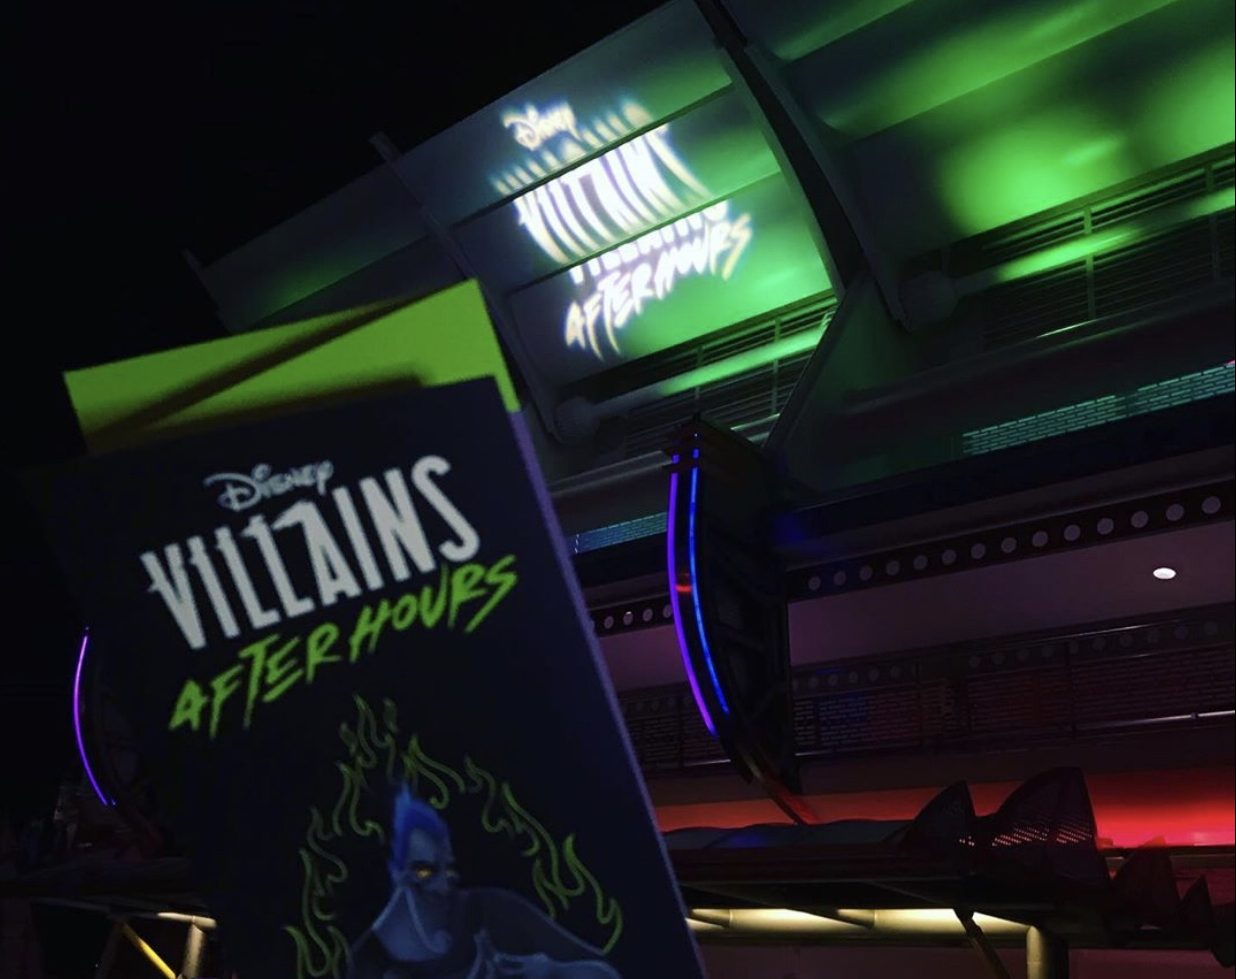 Villains After Dark at Disney’s Magic Kingdom